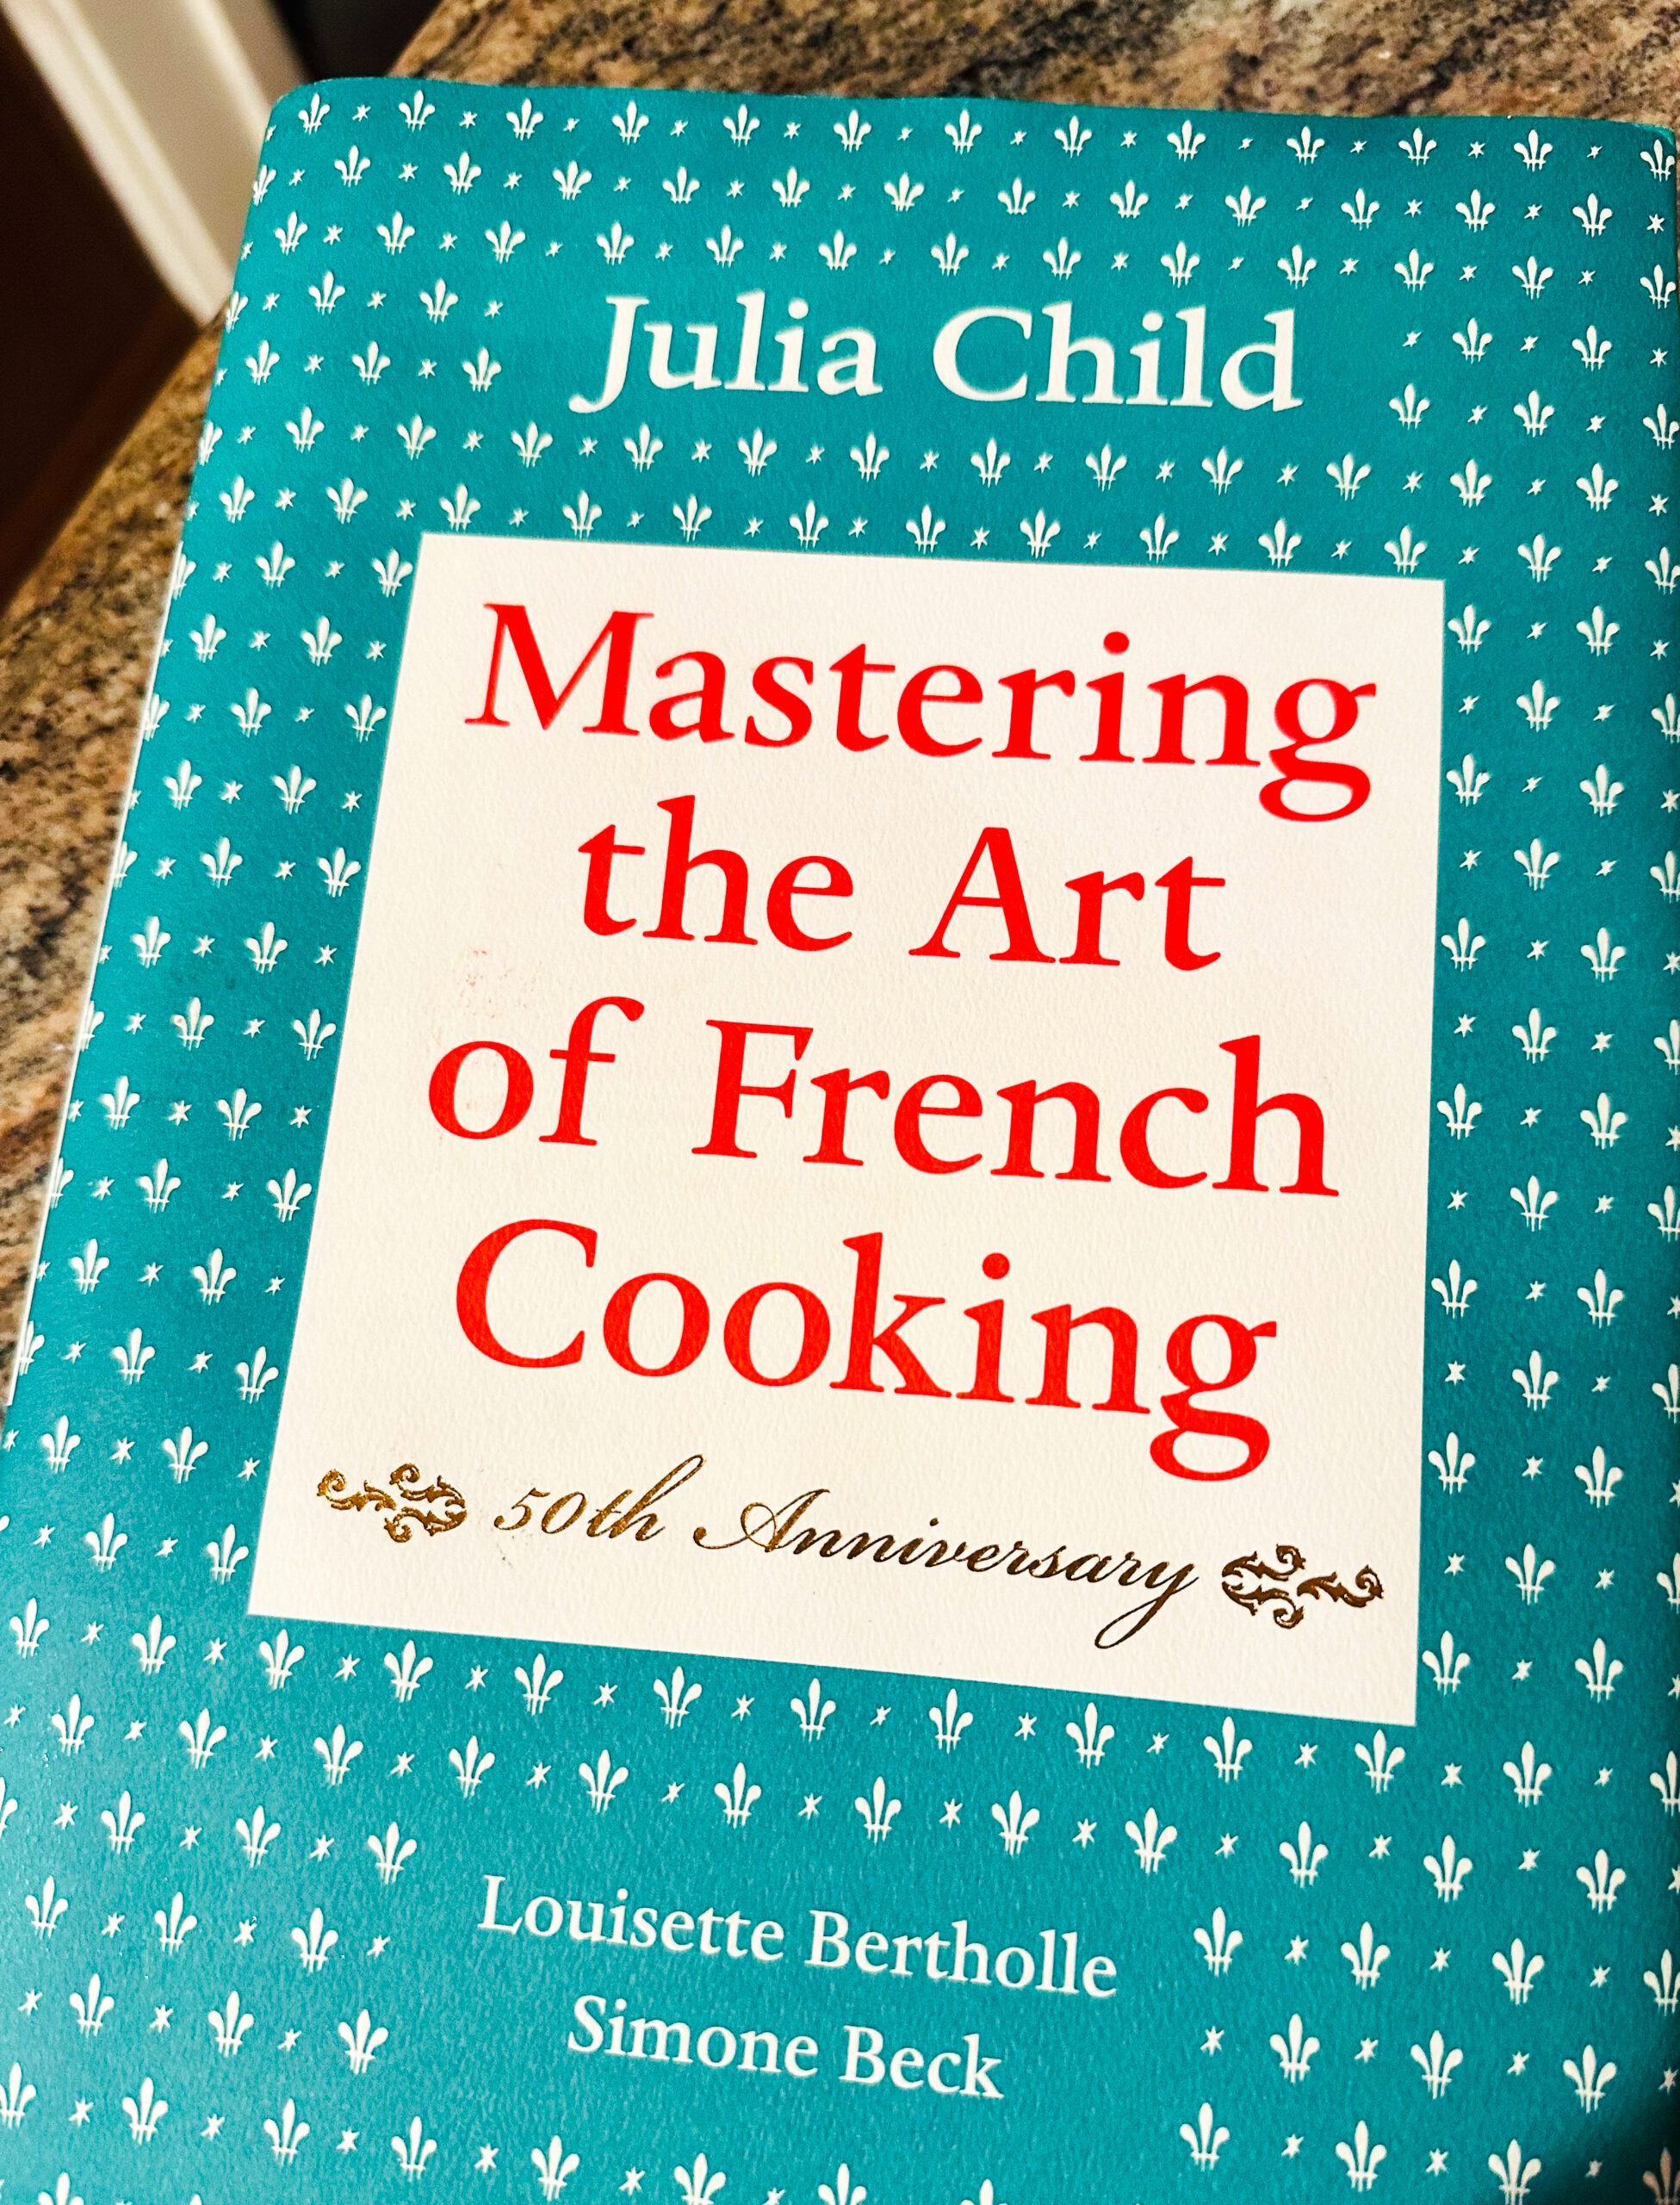 Julia Child cookbook